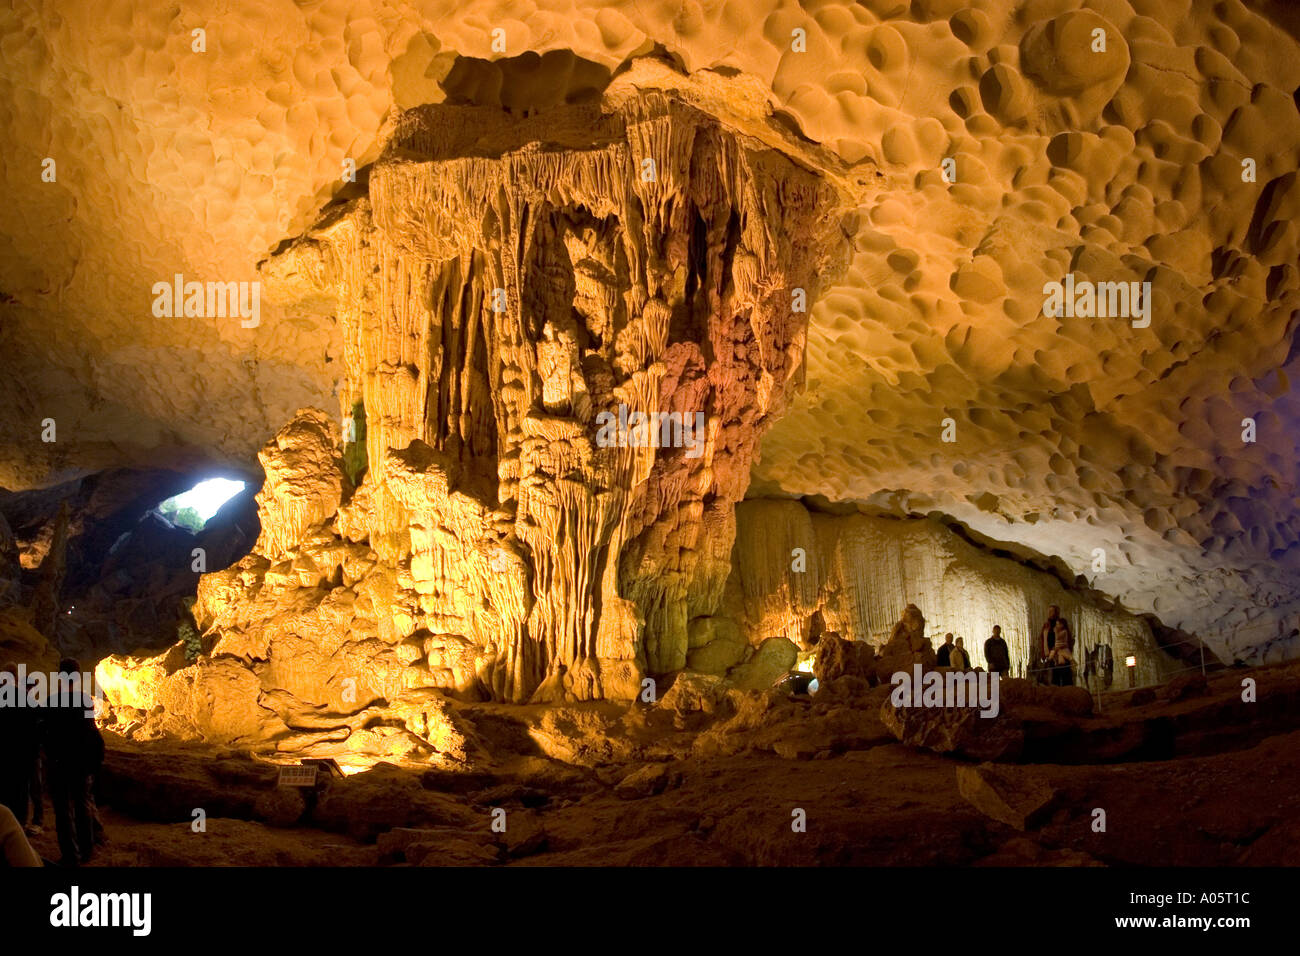 Vietnam northeast Halong Bay Hang Sung Sot cave visitors amongst illuminated underground stalactites and stalagmites Stock Photo